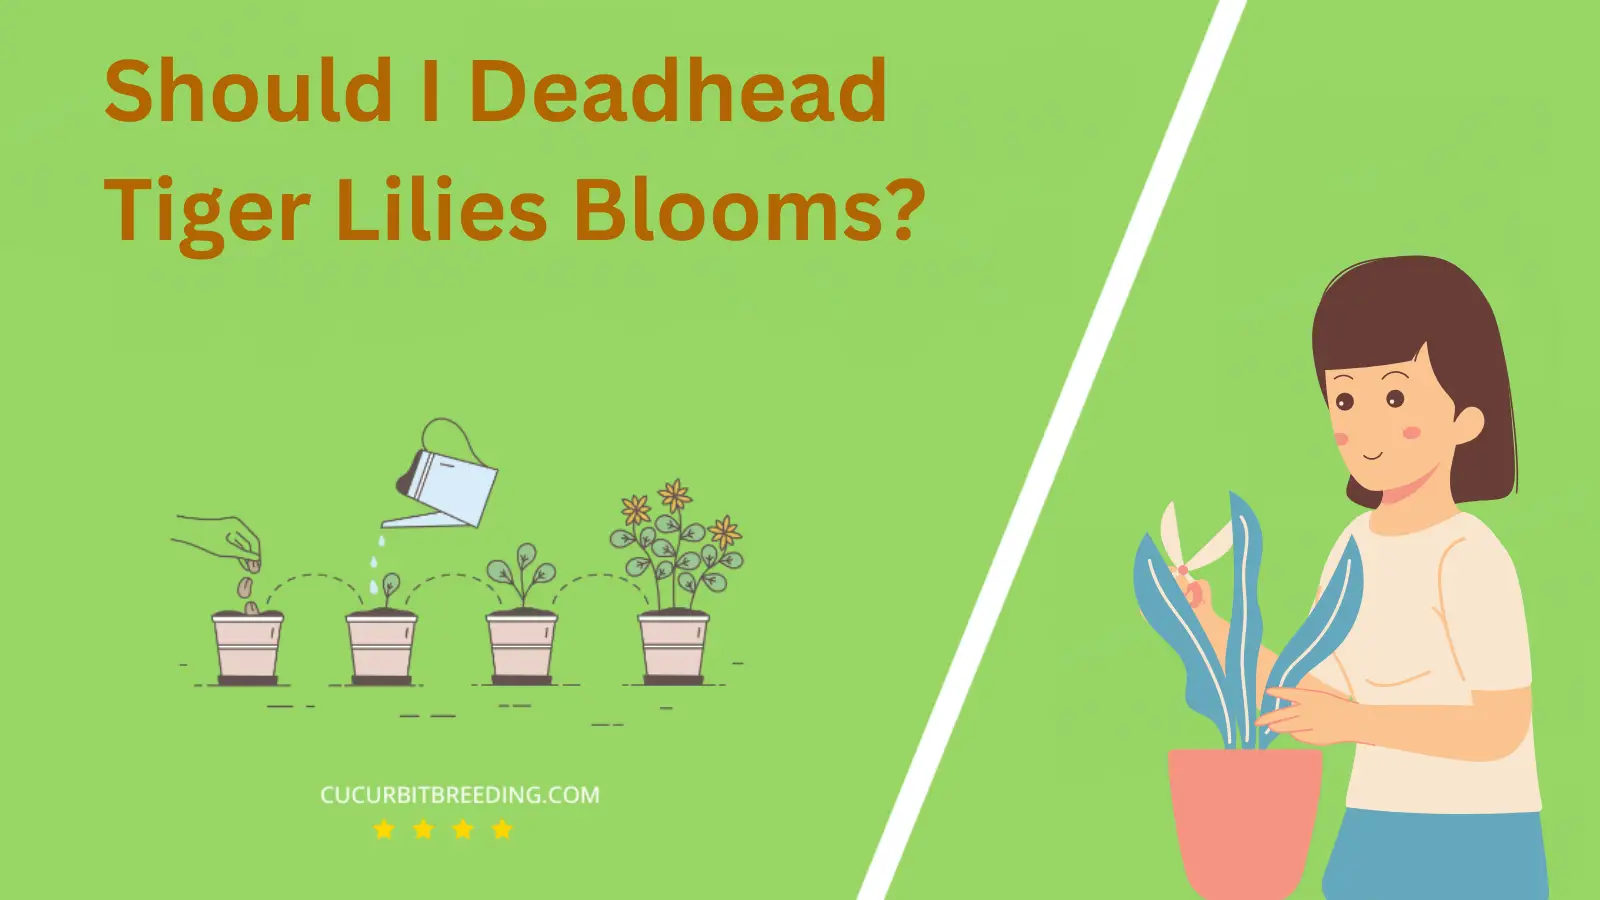 Should I Deadhead Tiger Lilies Blooms?